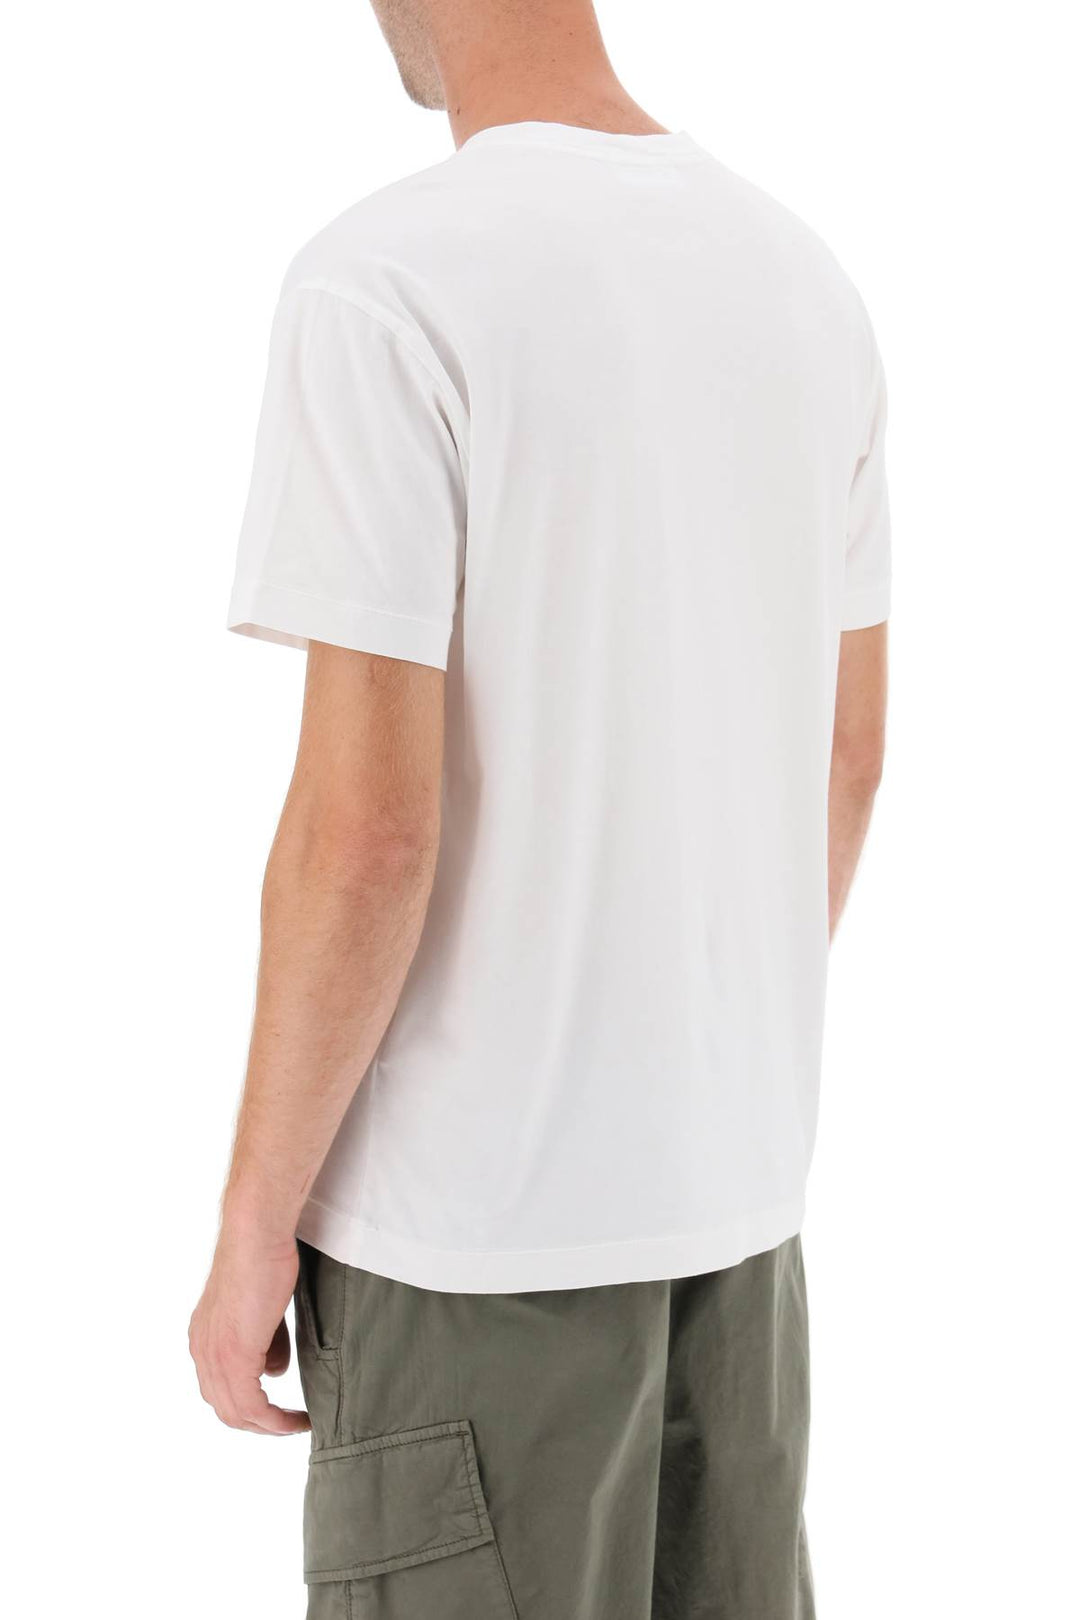 Stone Island Logo Patch T Shirt   White